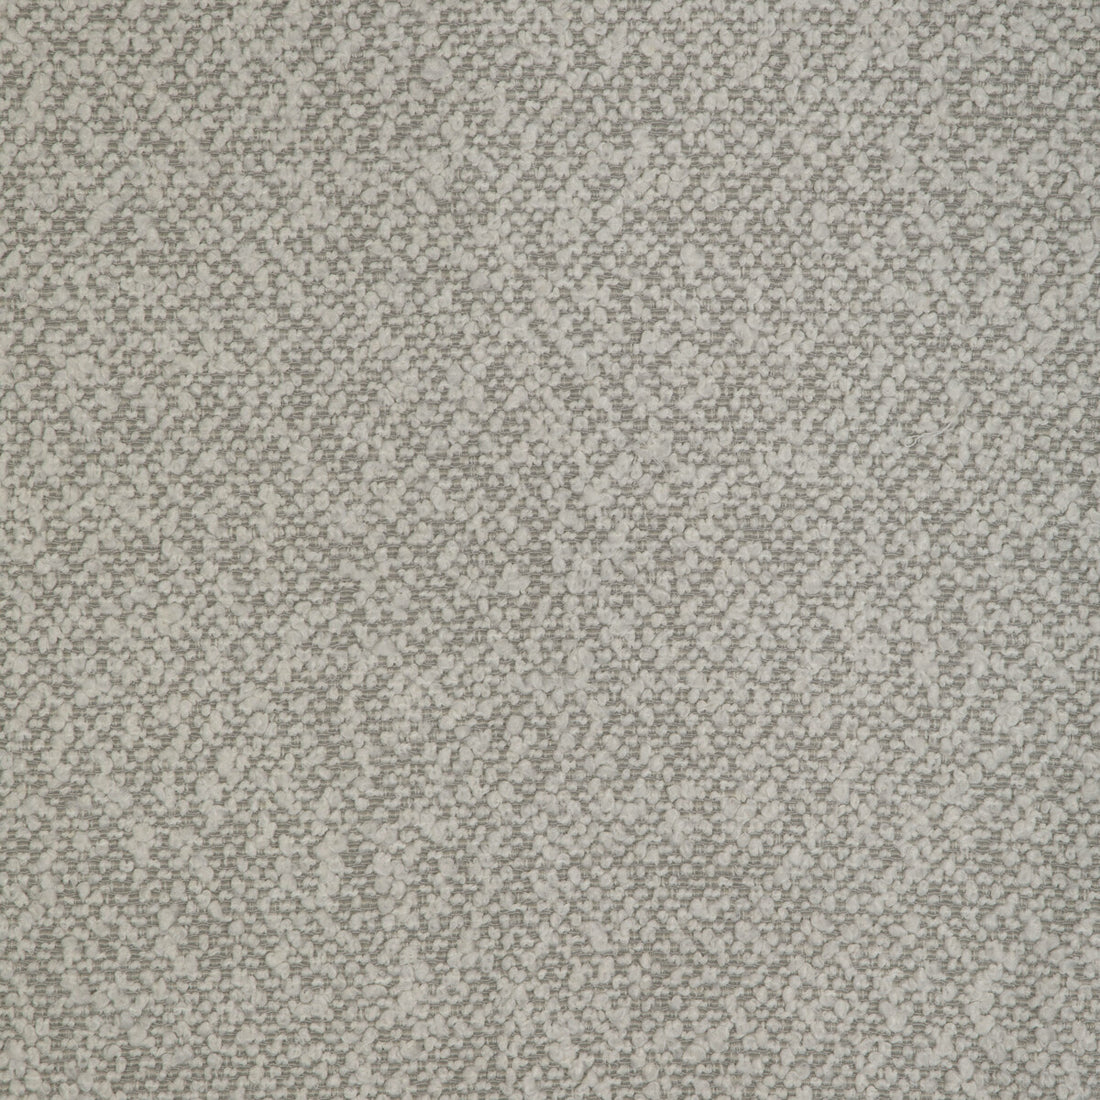 Kravet Smart fabric in 37001-11 color - pattern 37001.11.0 - by Kravet Smart in the Performance Kravetarmor collection